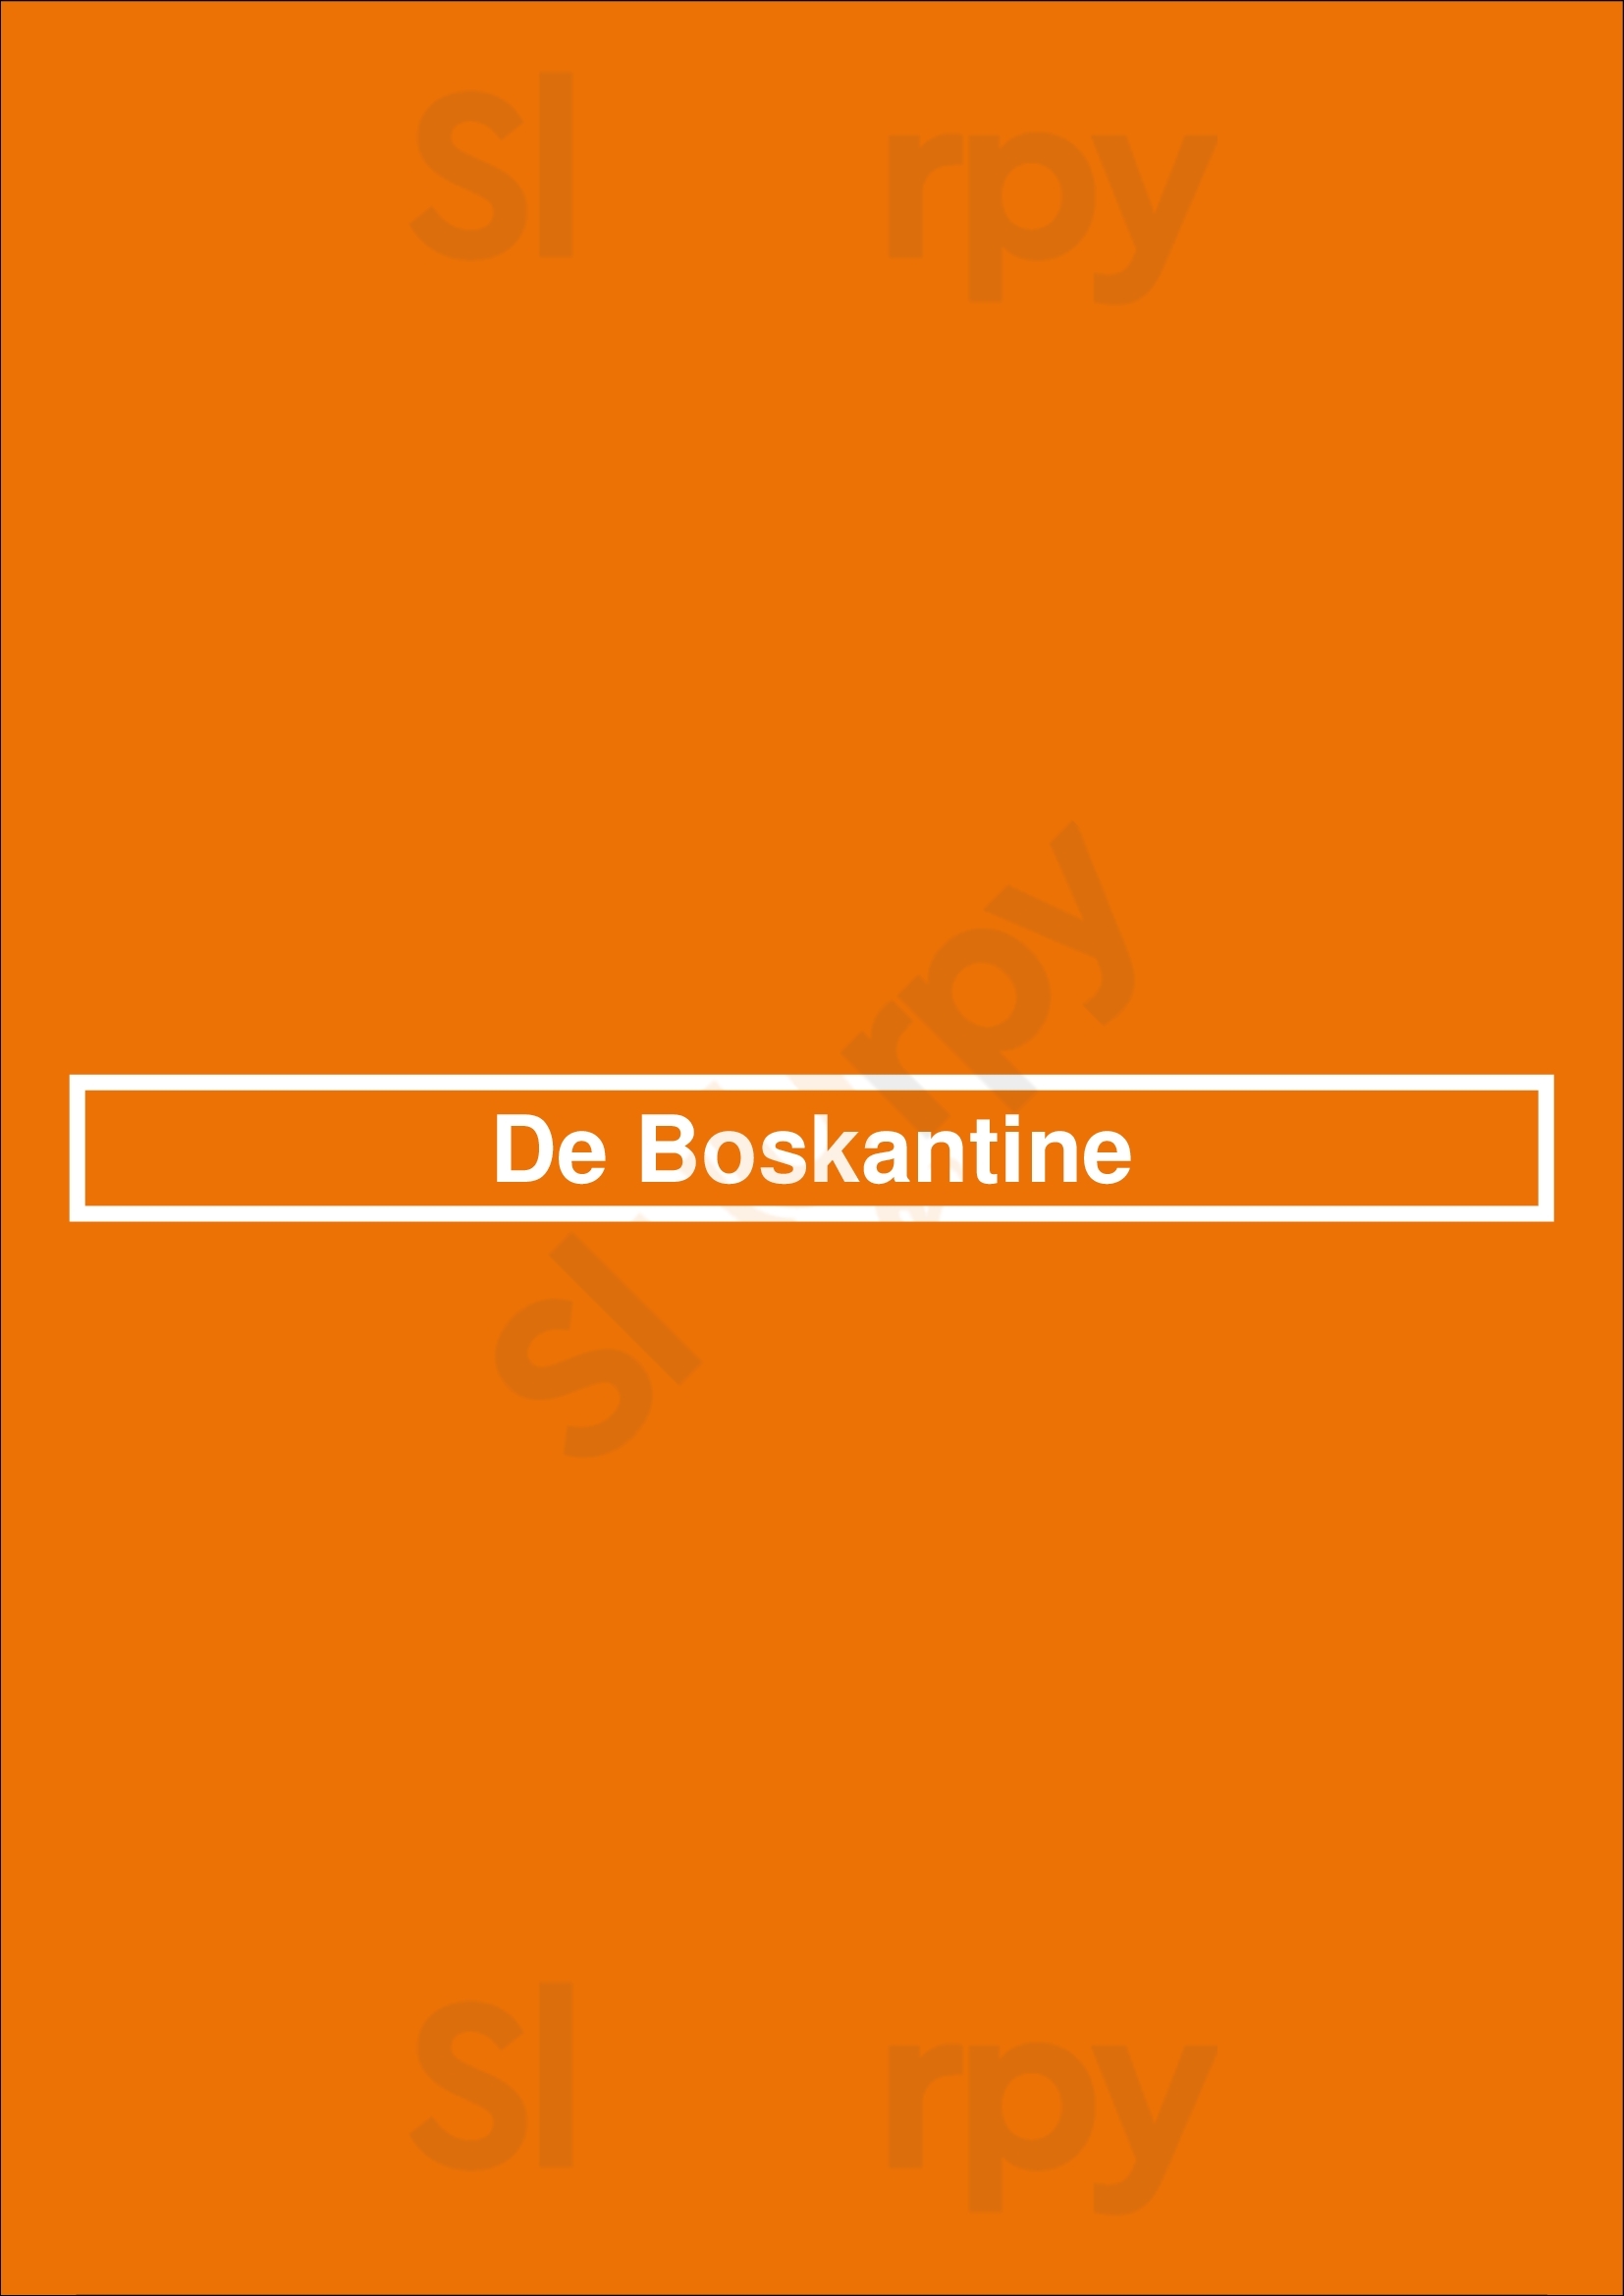 De Boskantine Hoenderloo Menu - 1